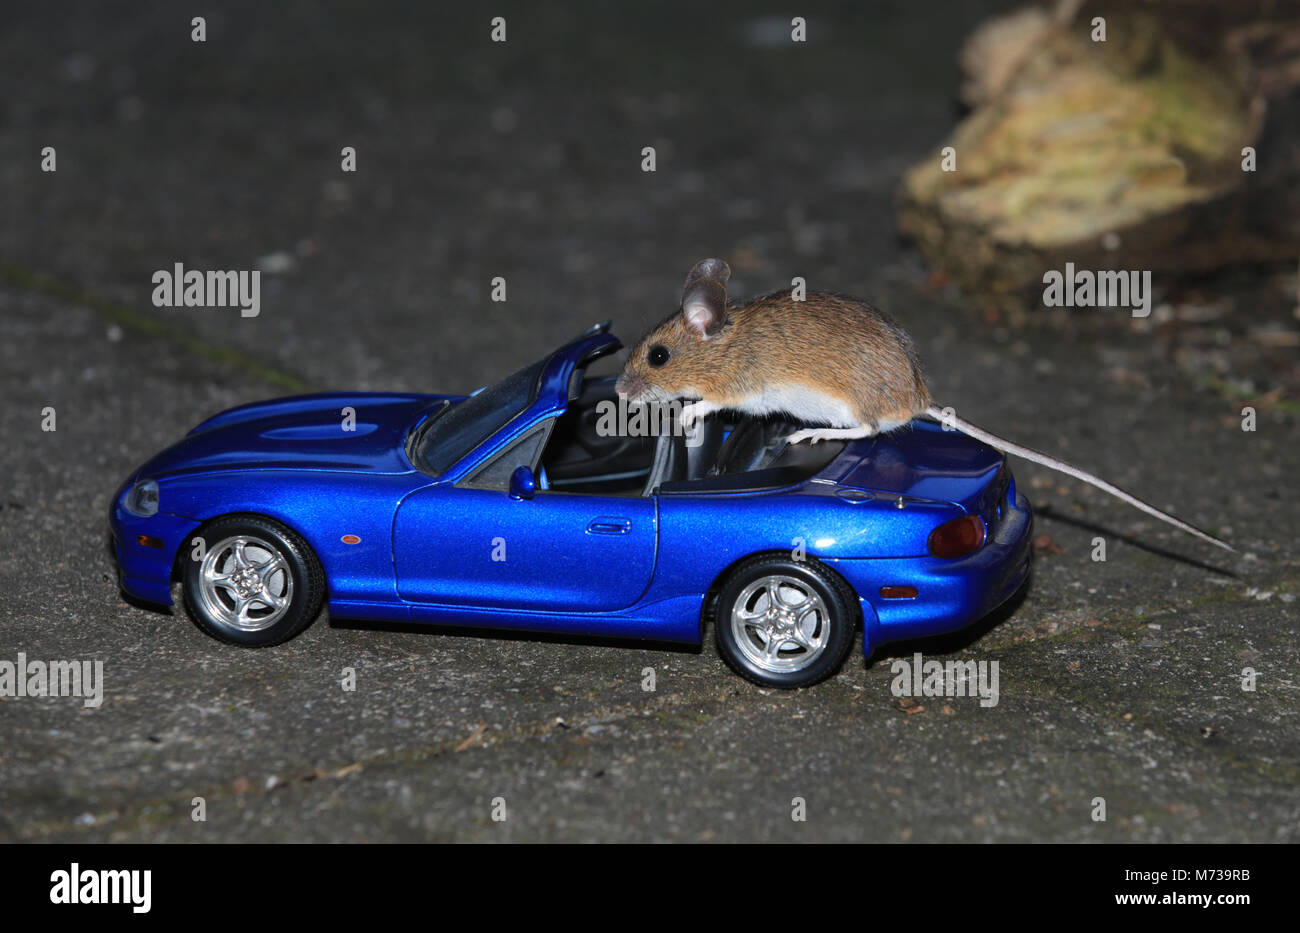 A Wood mouse (Apodemus sylvaticus) standing on a model car in an English garden. Stock Photo